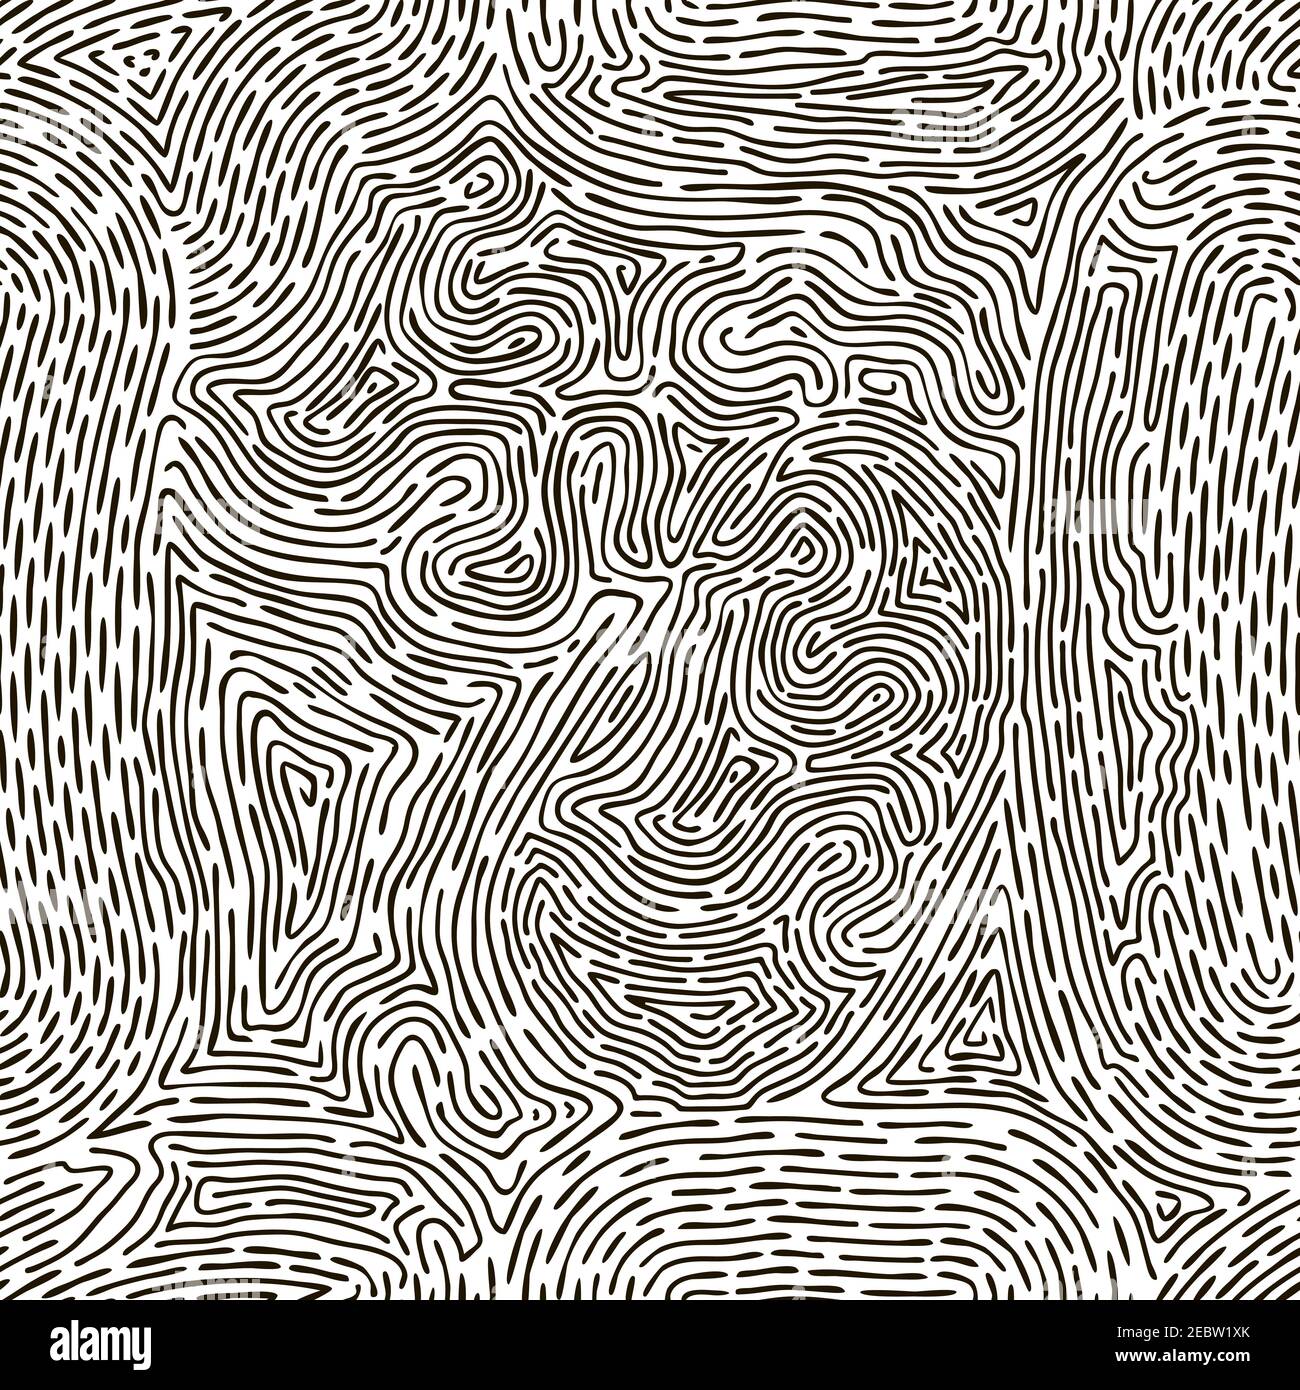 Fingerprint seamless pattern. Human thumb fingerprints lines, abstract fingerprint grid. Finger mark vector background illustration Stock Vector